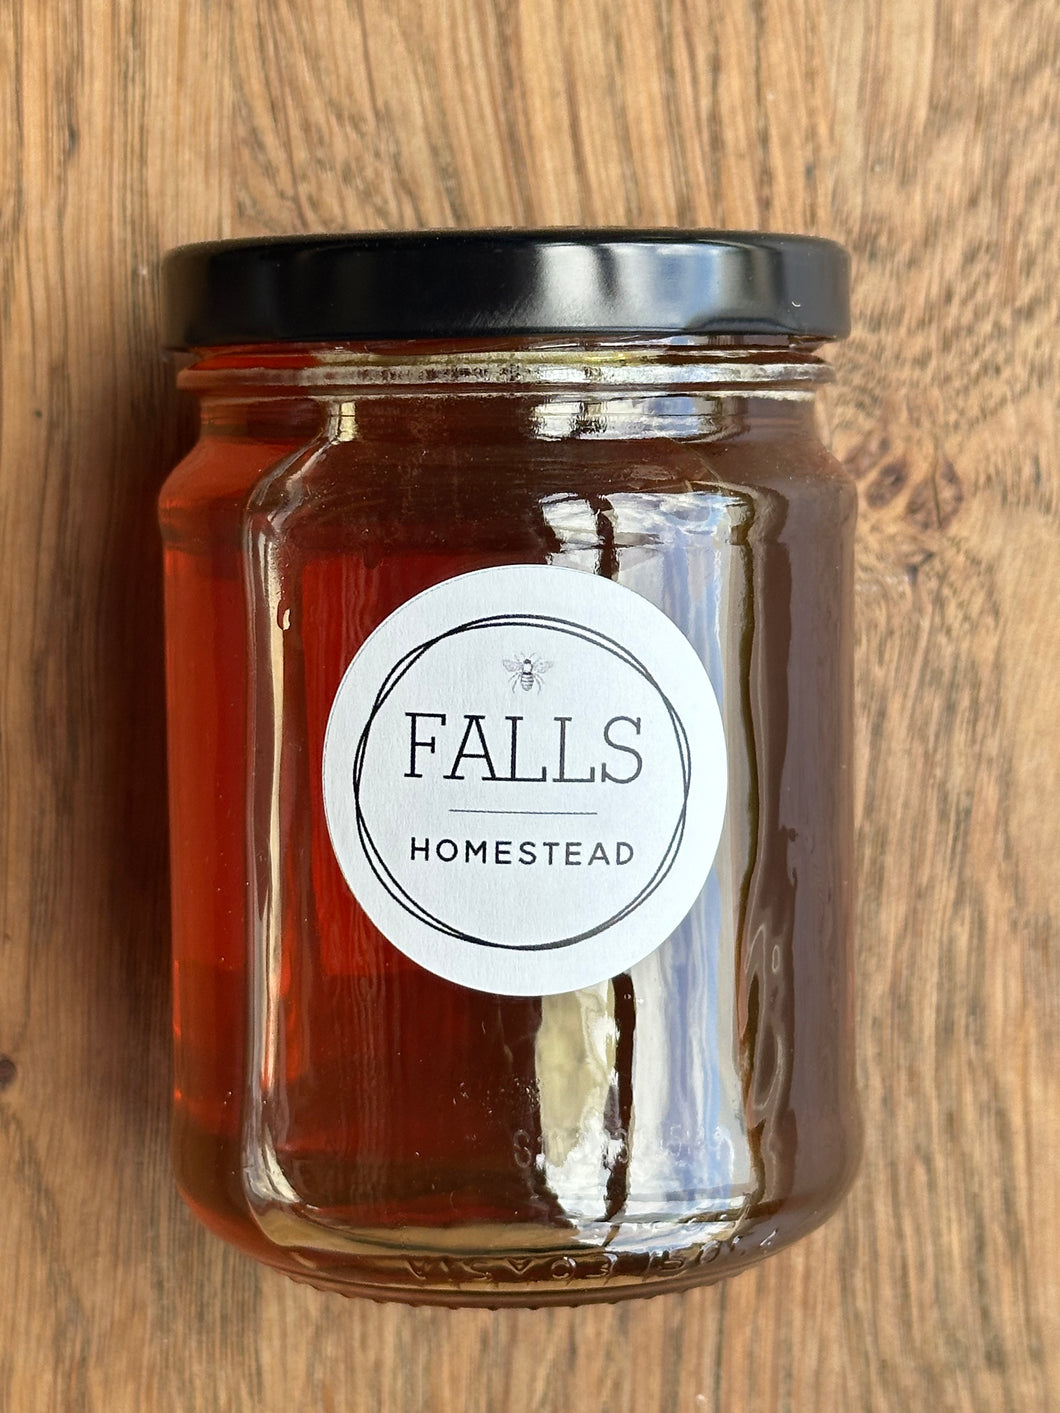 Falls homestead + Local Bush Honey